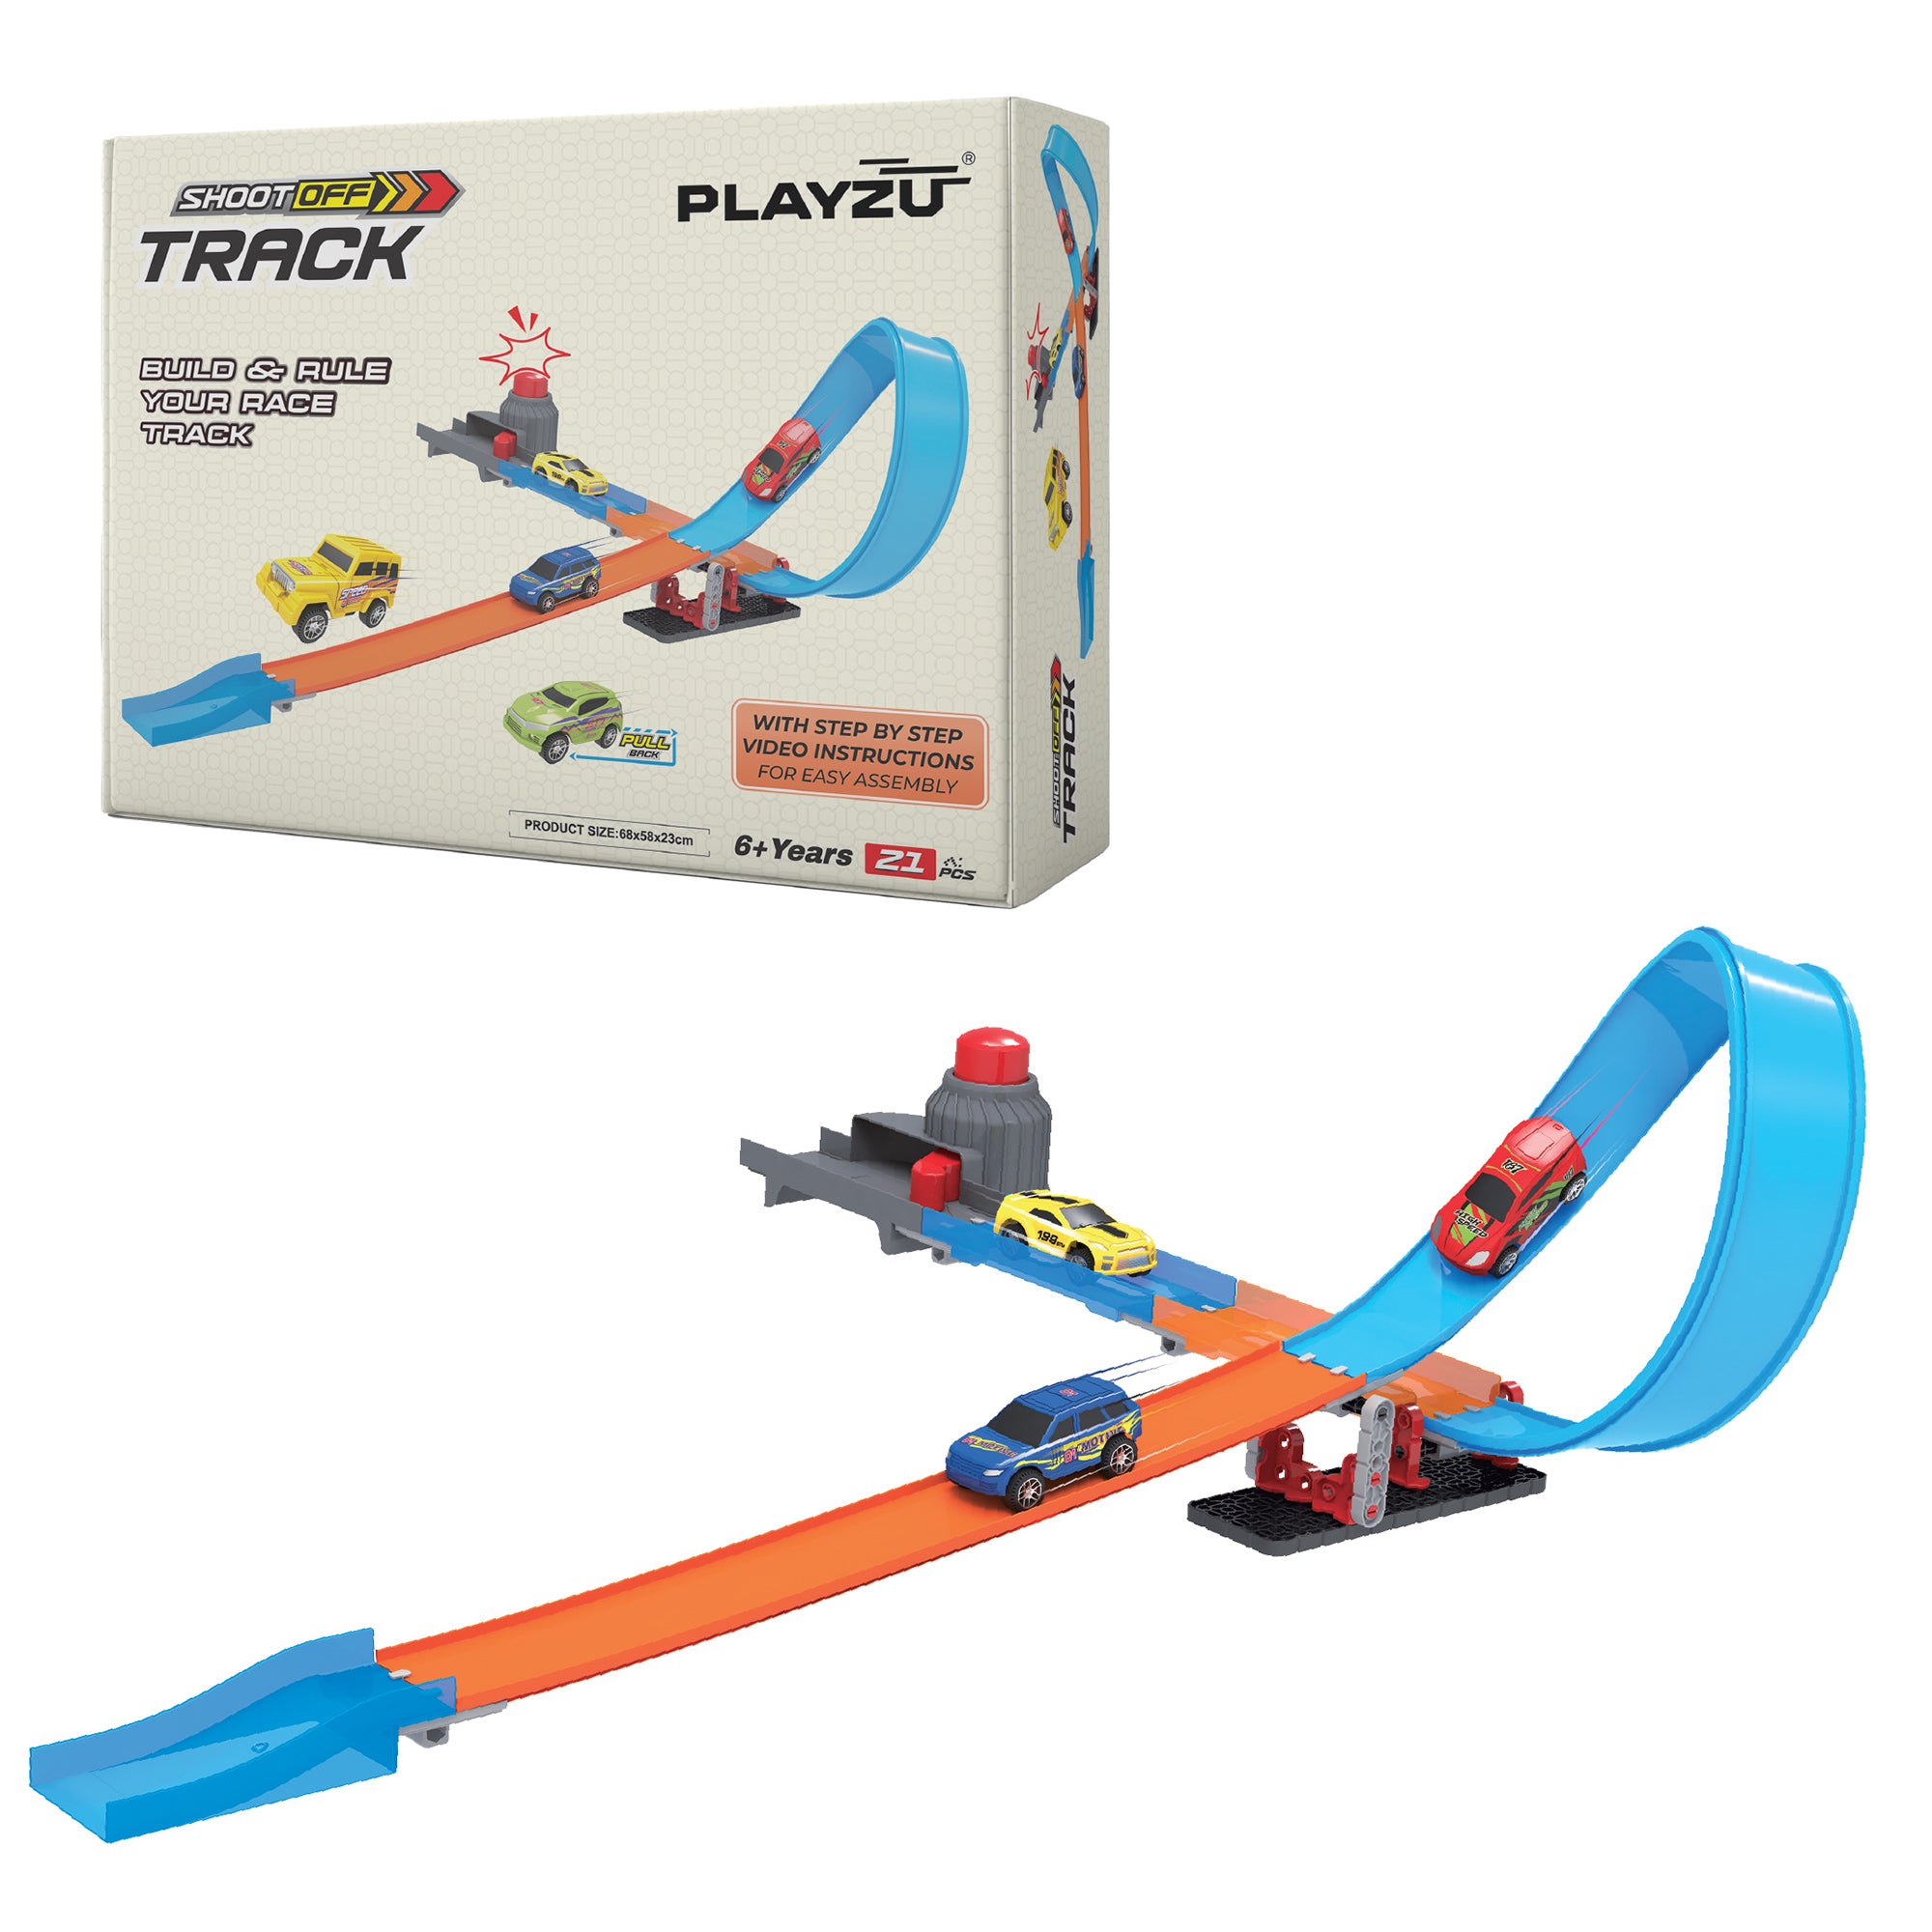 Playzu Shoot-Off Track-1B-Twist 6+Years